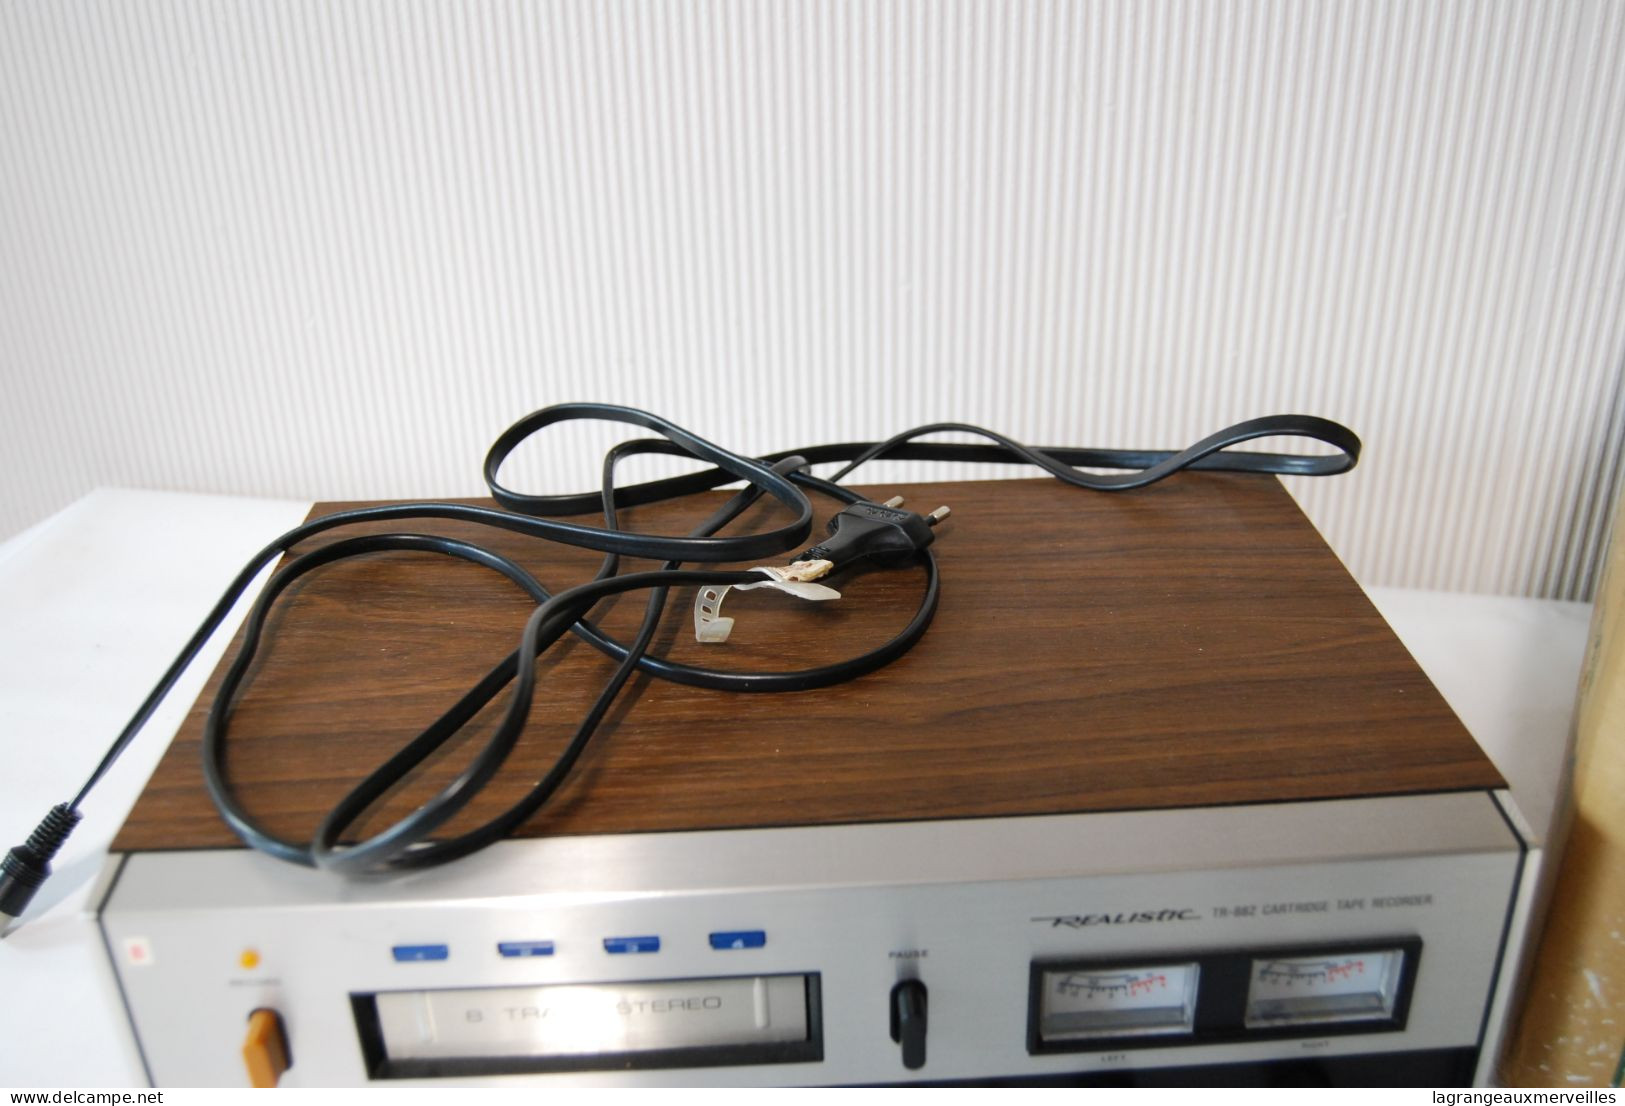 E2 Ancien Appareil Realistic Vintage TR 882 Cartridge Tape Recorder - Musikinstrumente